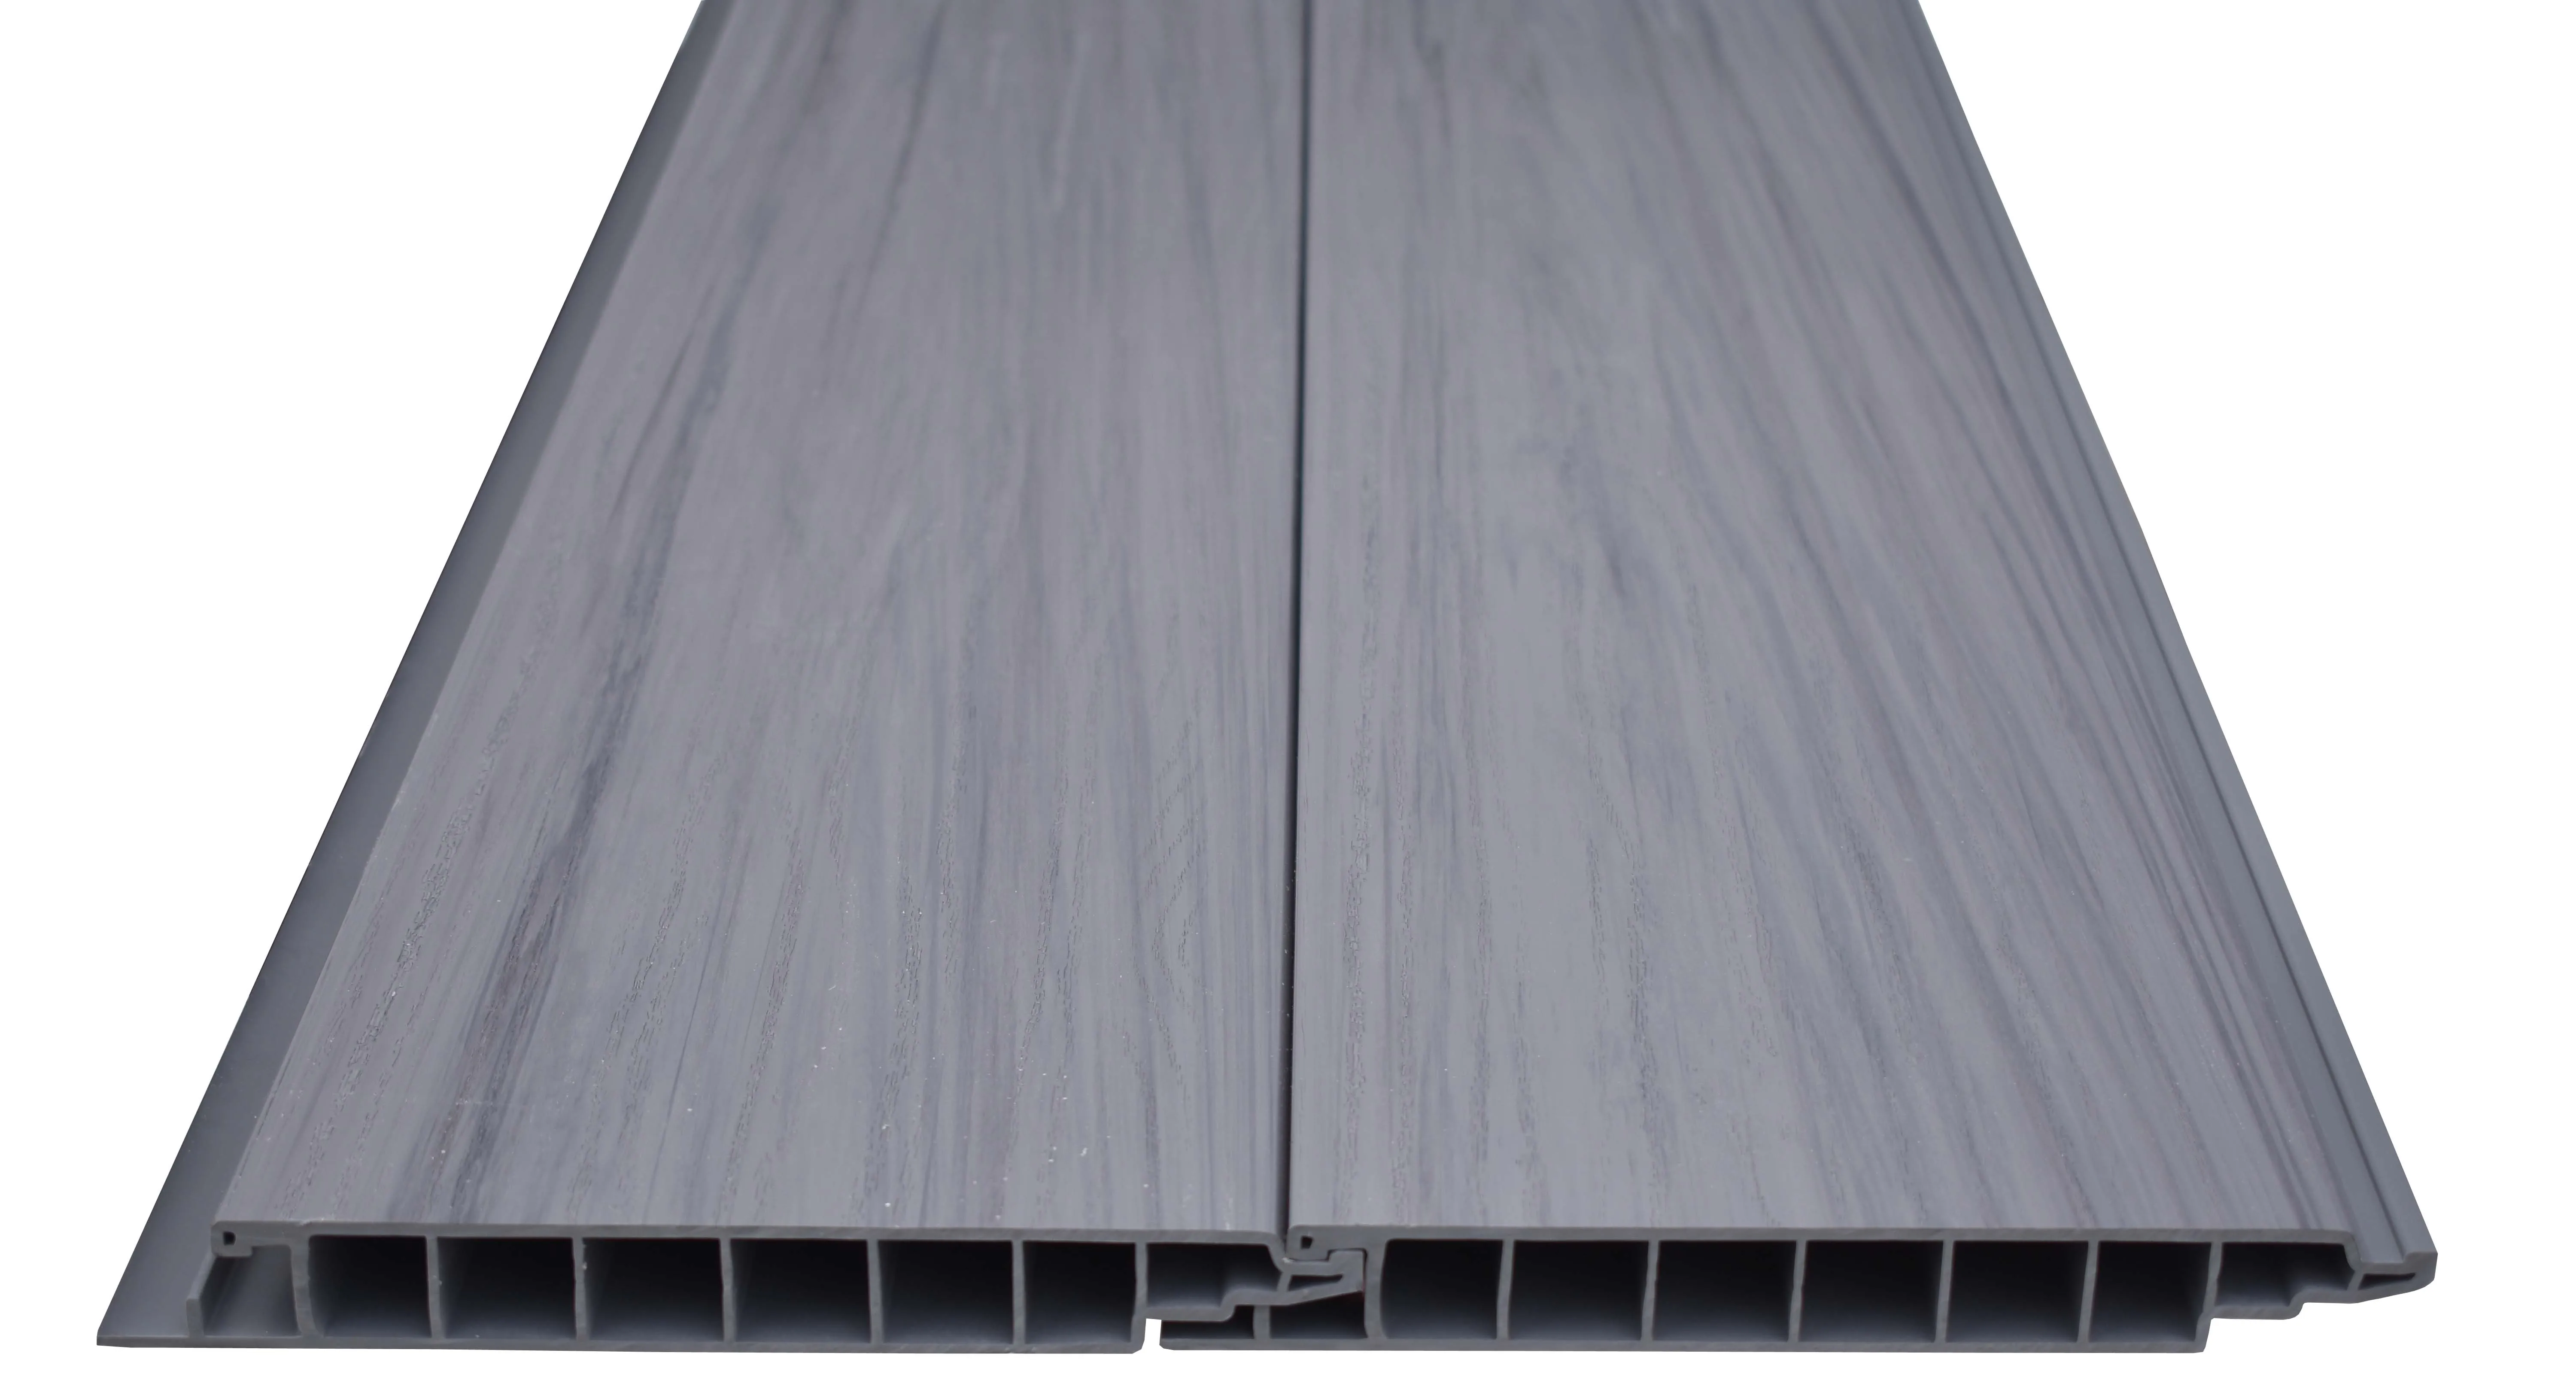 waterproof vinyl flooring for decks